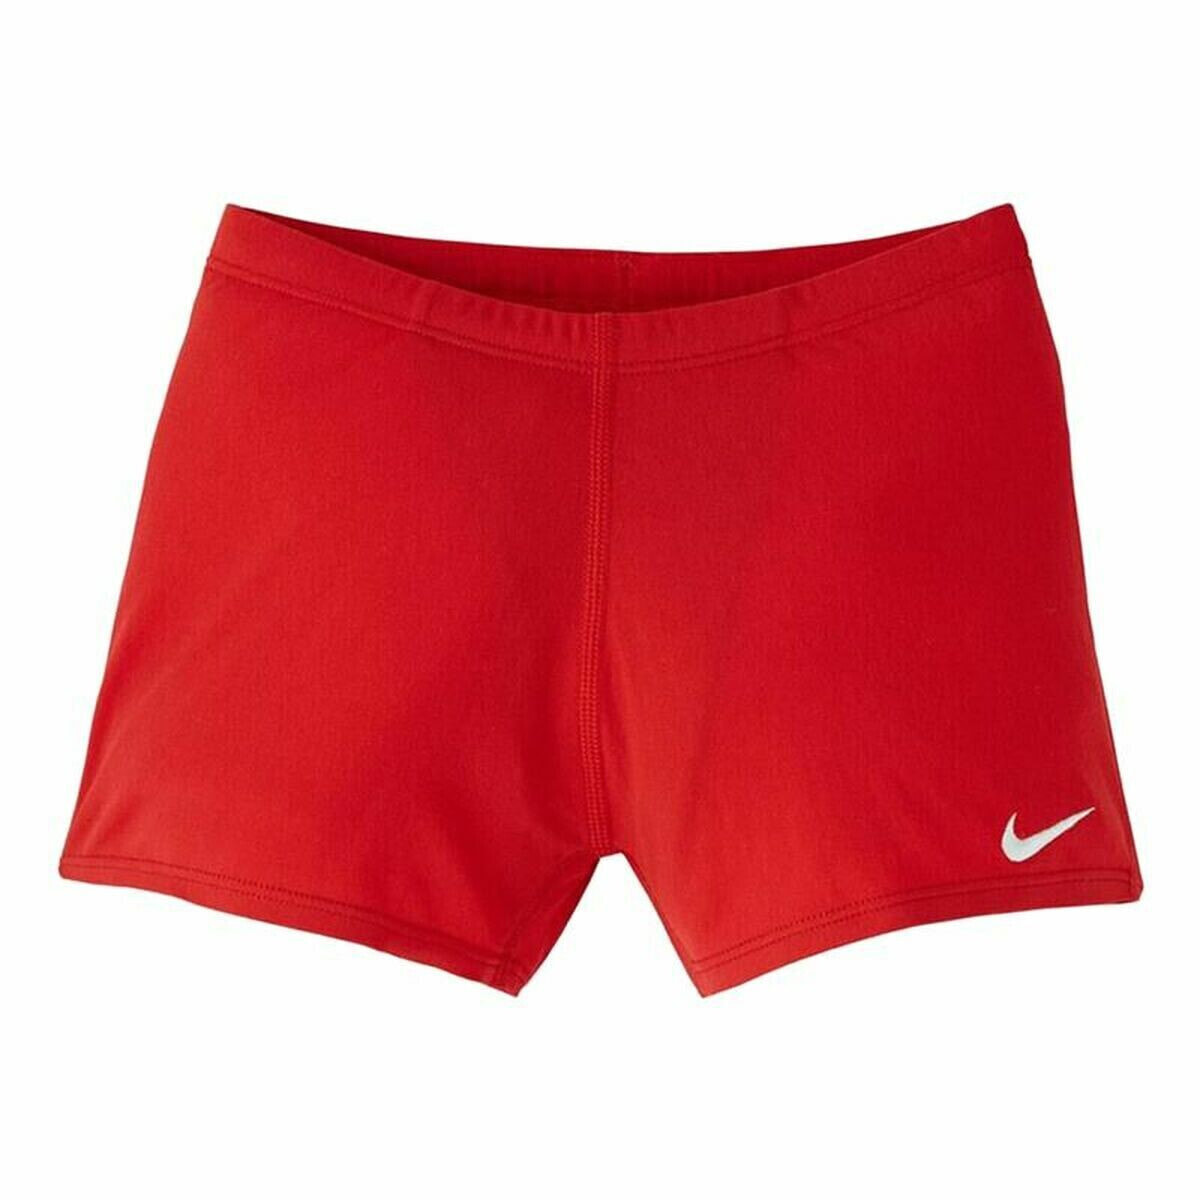 Men’s Bathing Costume Nike Boxer Swim Red